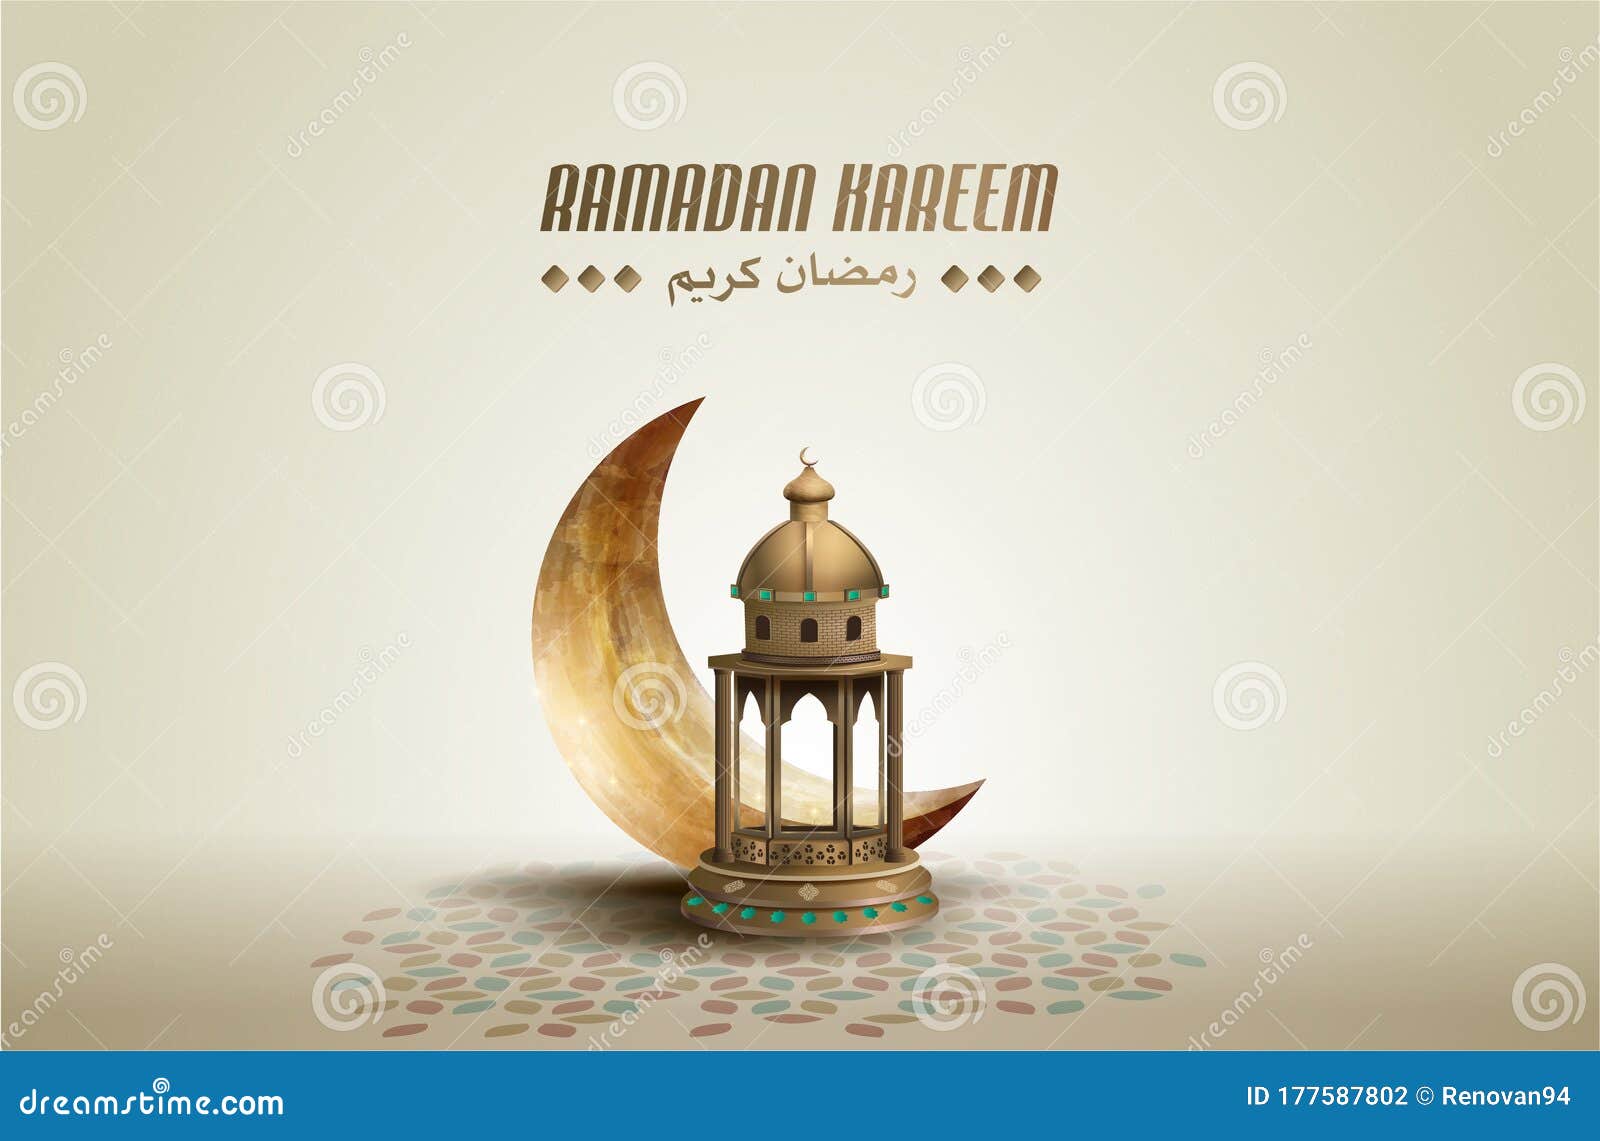 islamic greeting ramadan kareem card  background with gold lantern and crescent